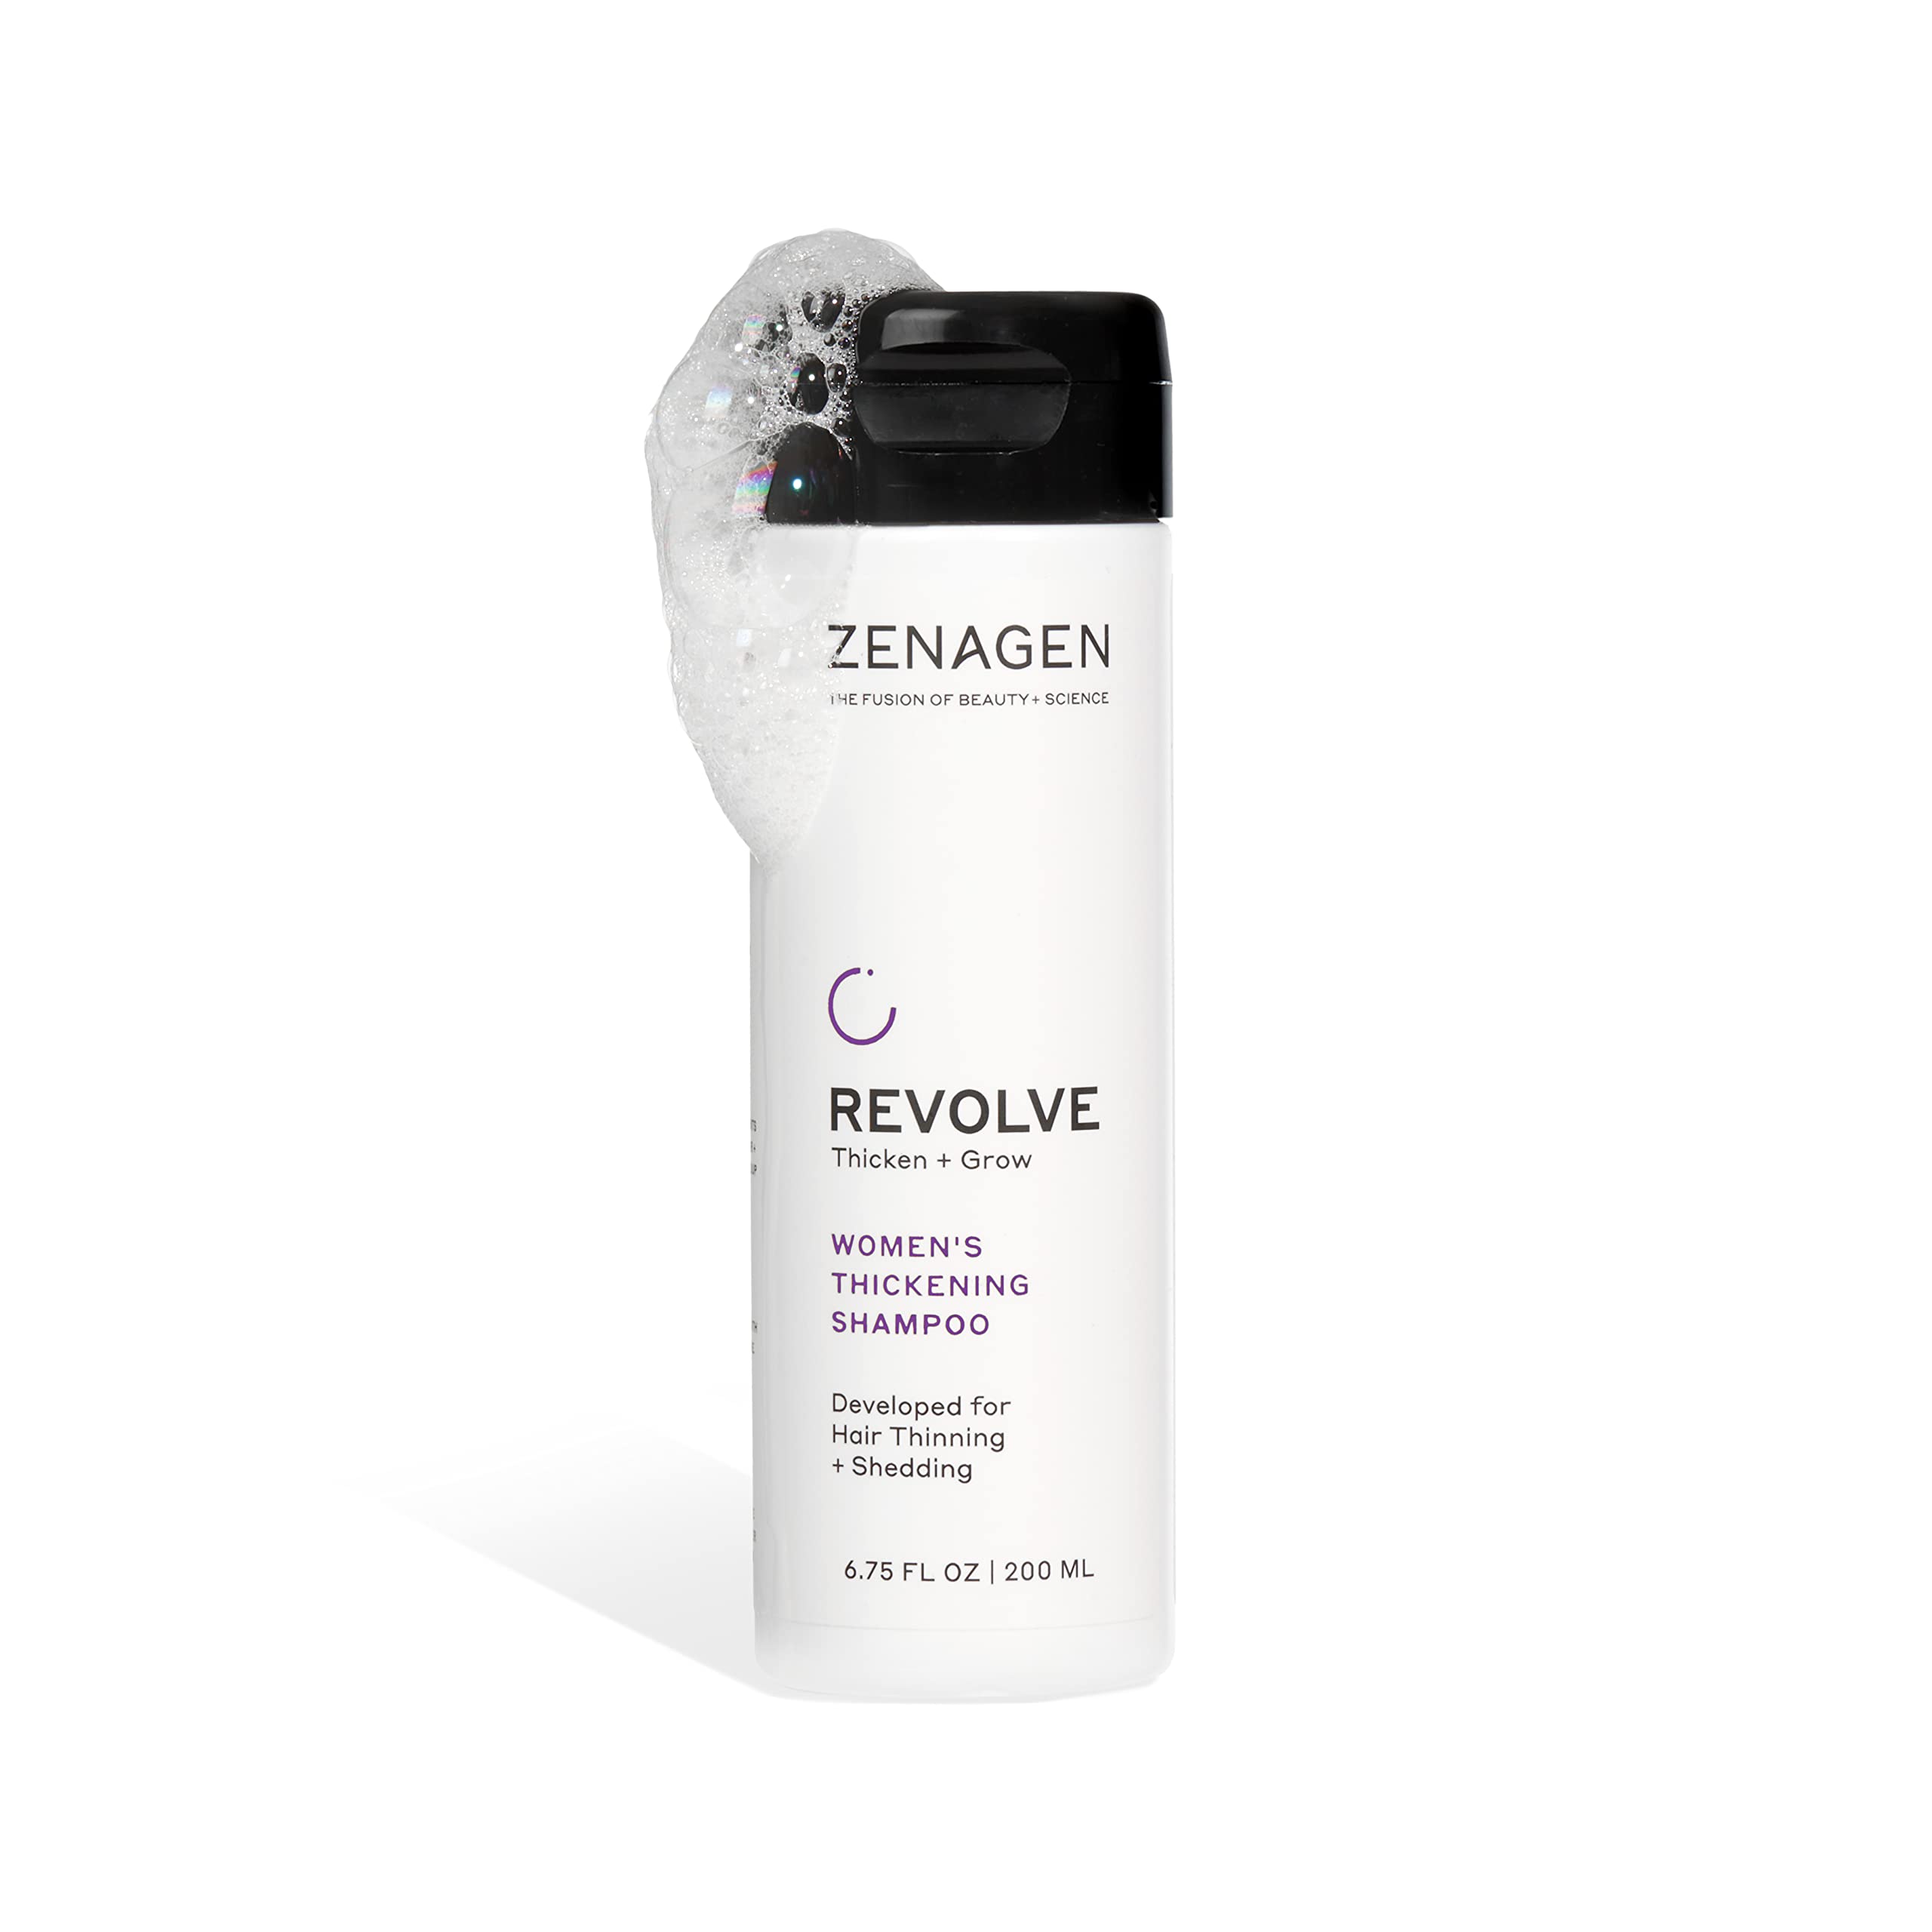 Zenagen Revolve Thickening and Hair Loss Shampoo Treatment for Women